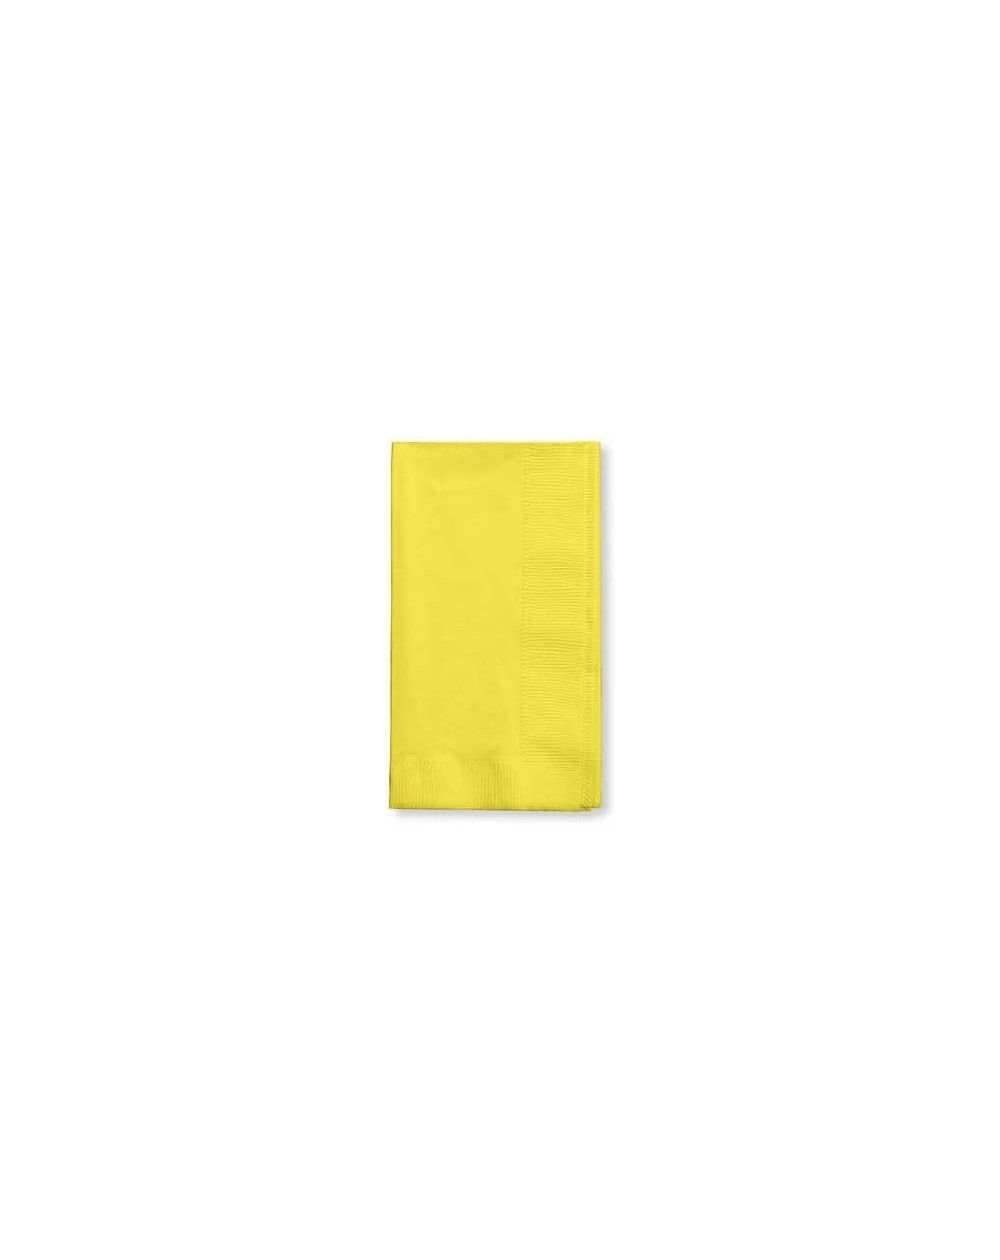 Tableware Mimosa (Light Yellow) Dinner Napkins (3-Ply)(25 Pack) - Mimosa - C91129BKLXL $13.35